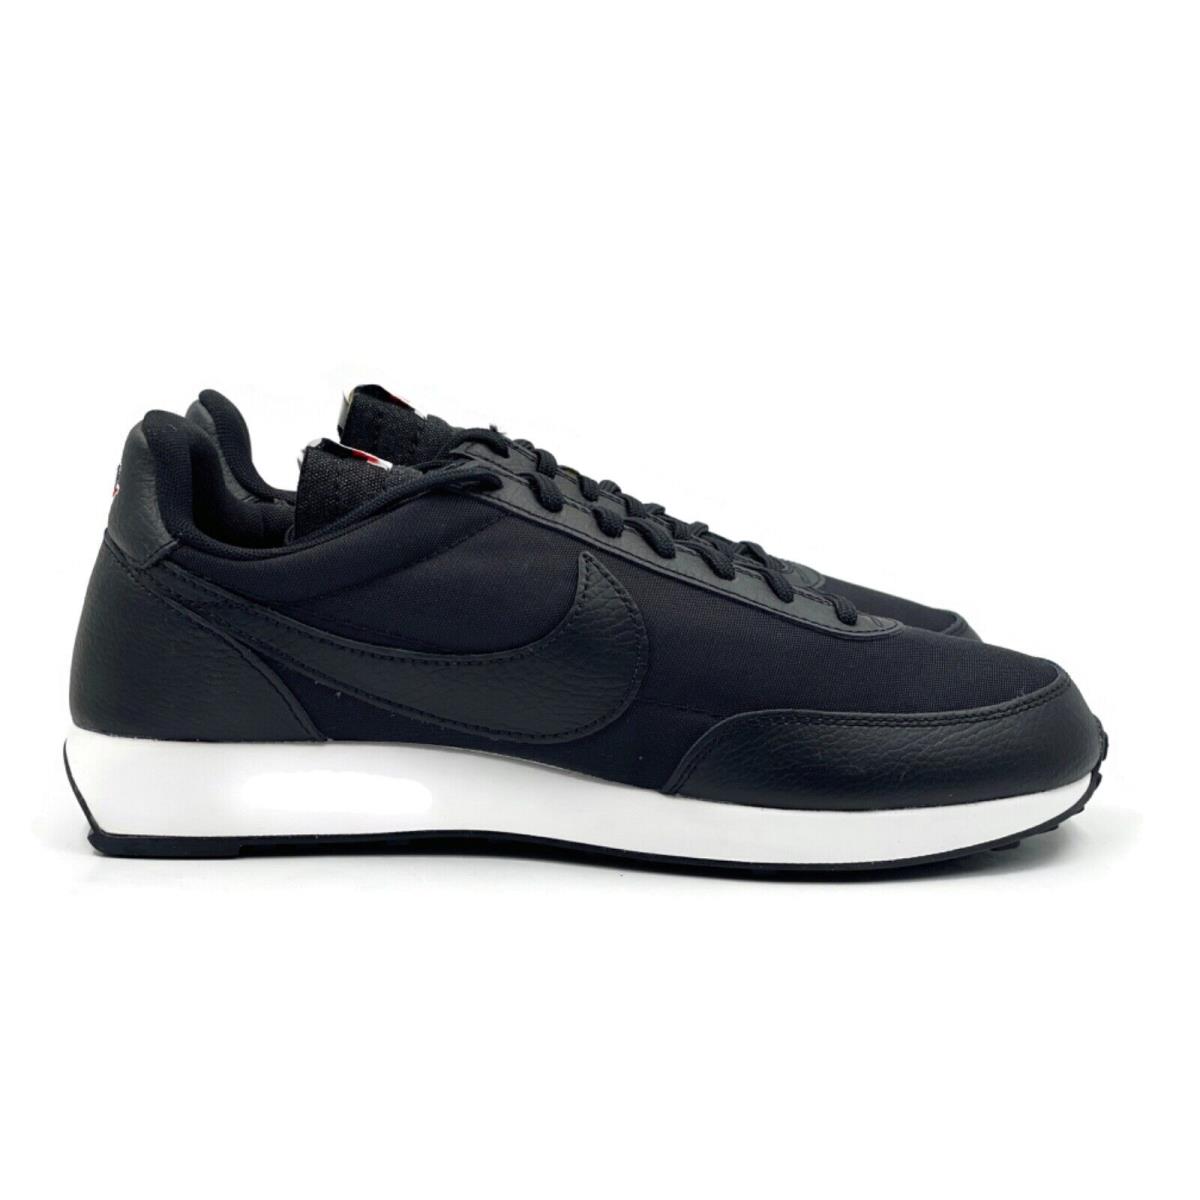 Nike Air Tailwind 79 SE Men Casual Retro Lifestyle Shoe Black White Sneaker